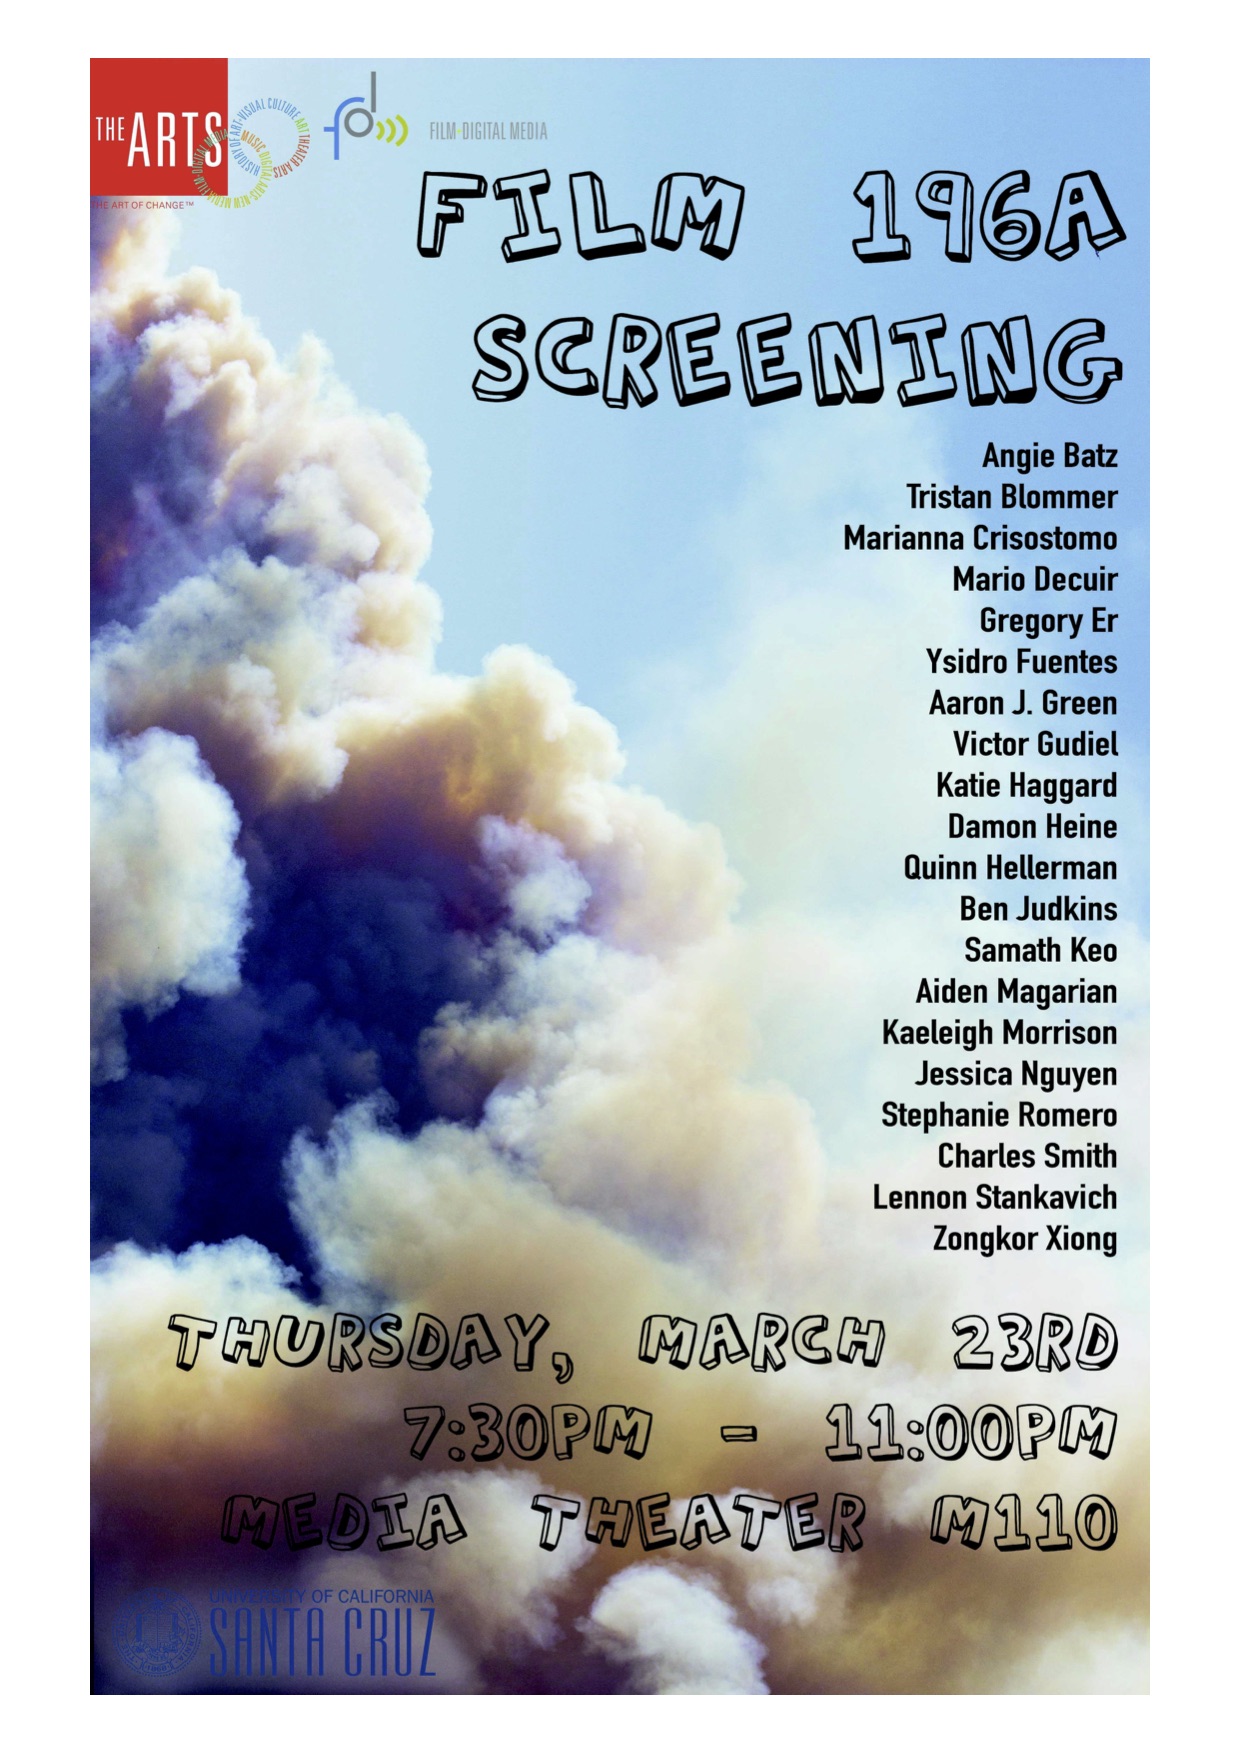 Flyer for Senior Production Screening